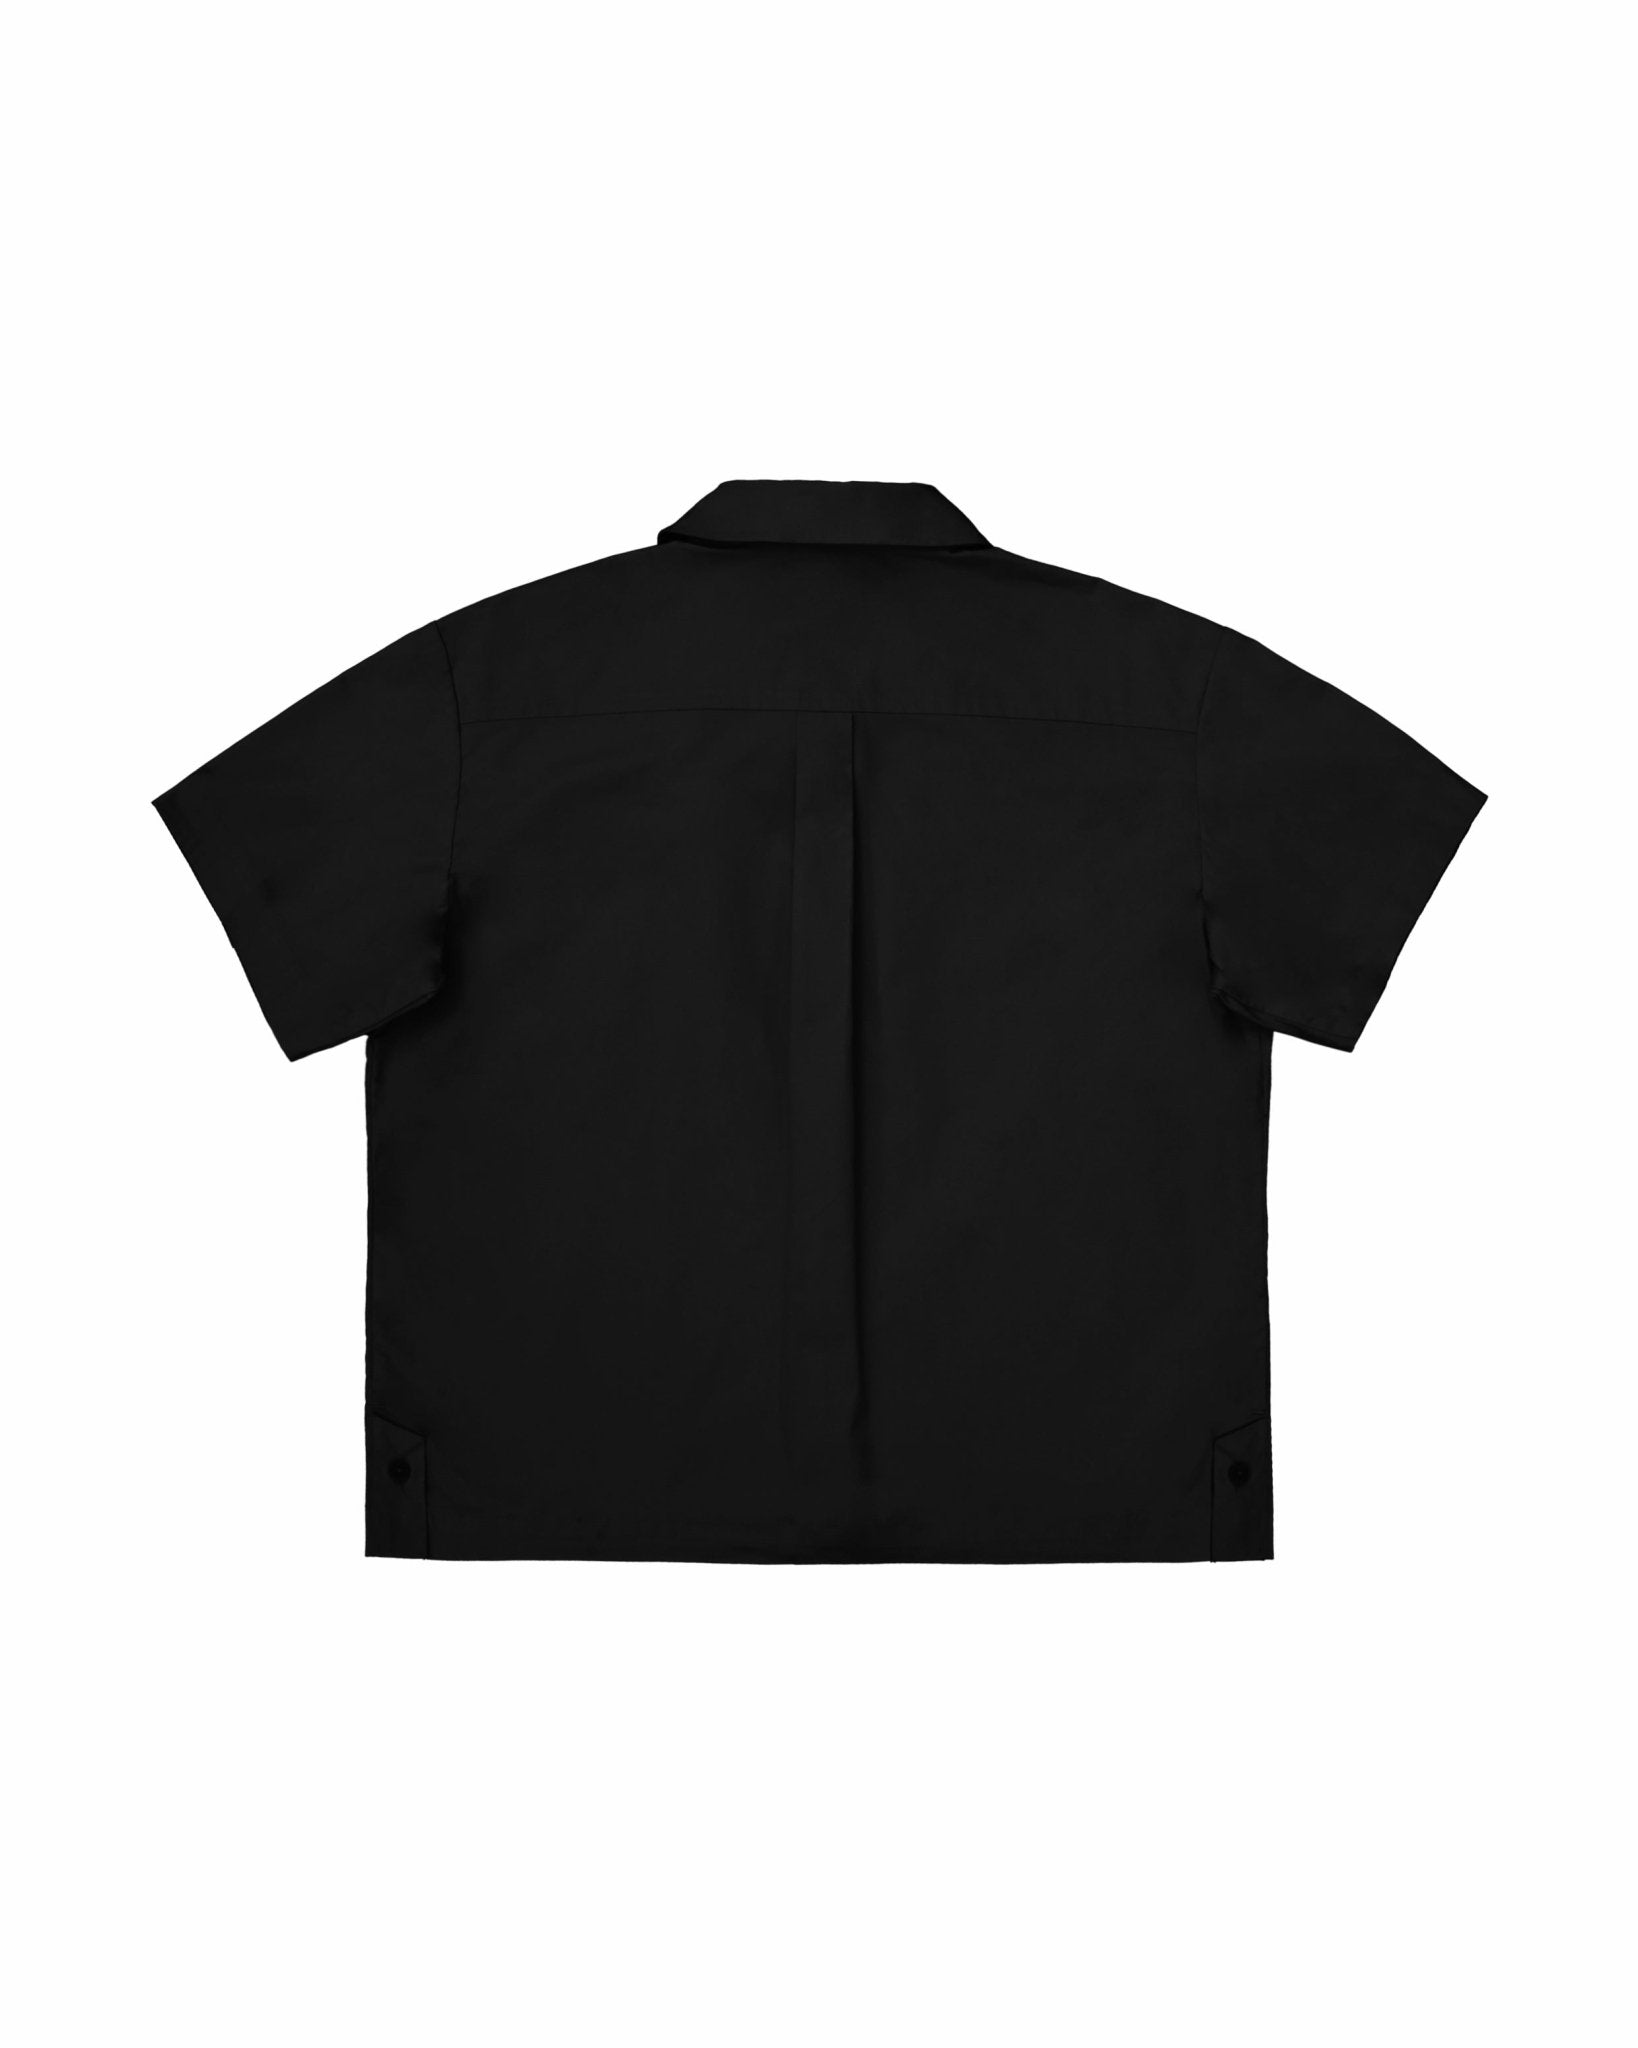 Cropped Tie Shirt - Black - G R A Y E